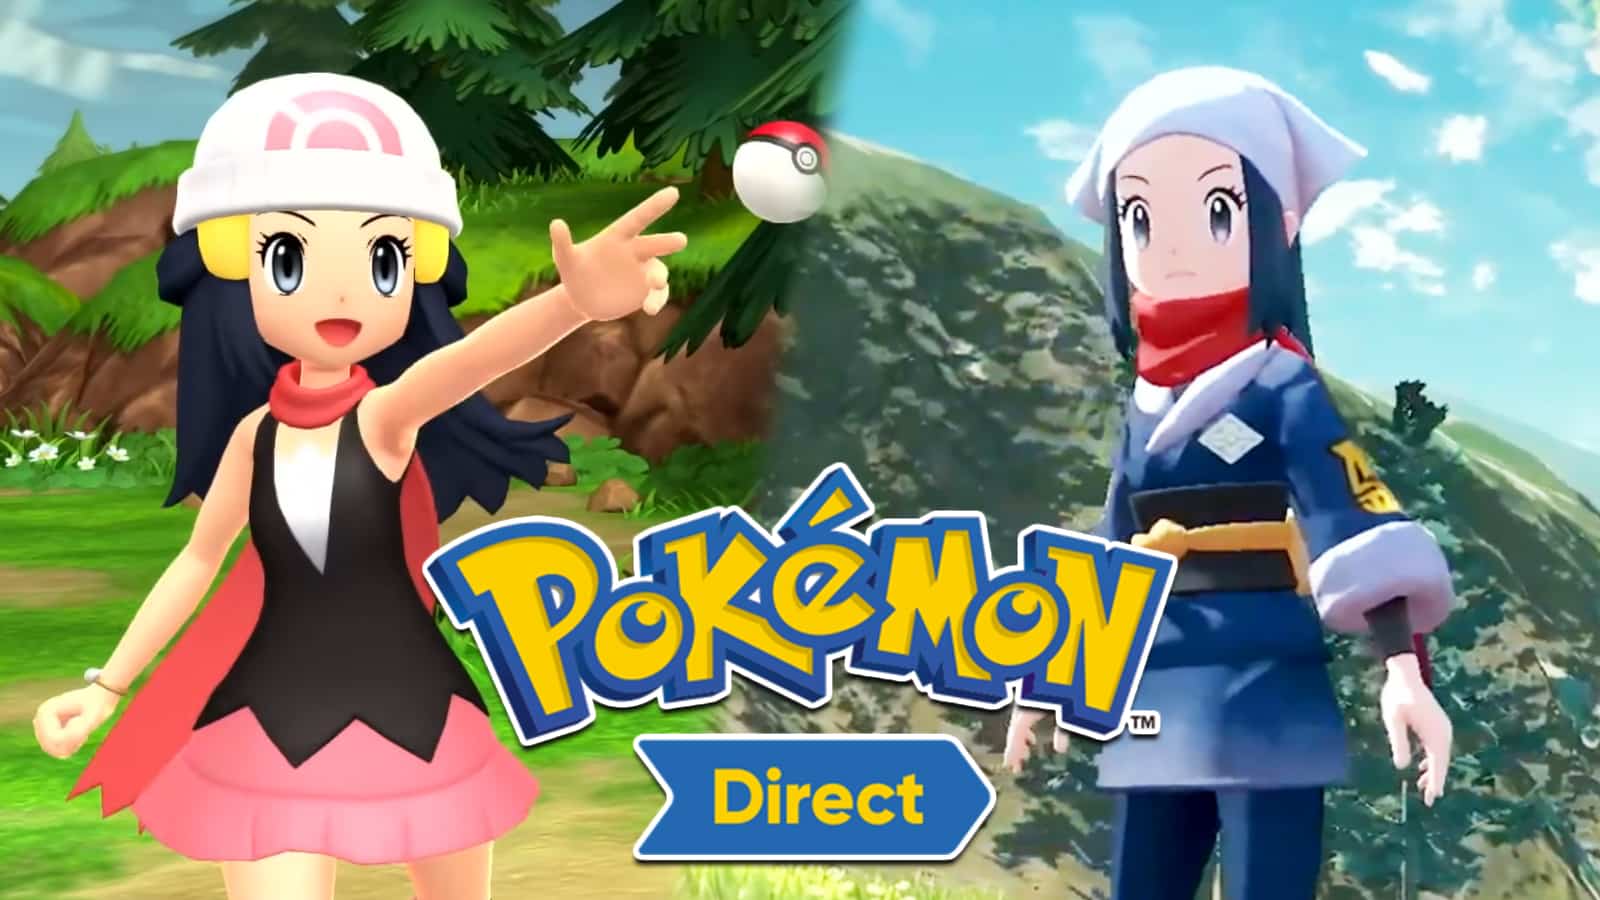 Pokémon news from the June 21 Nintendo Direct